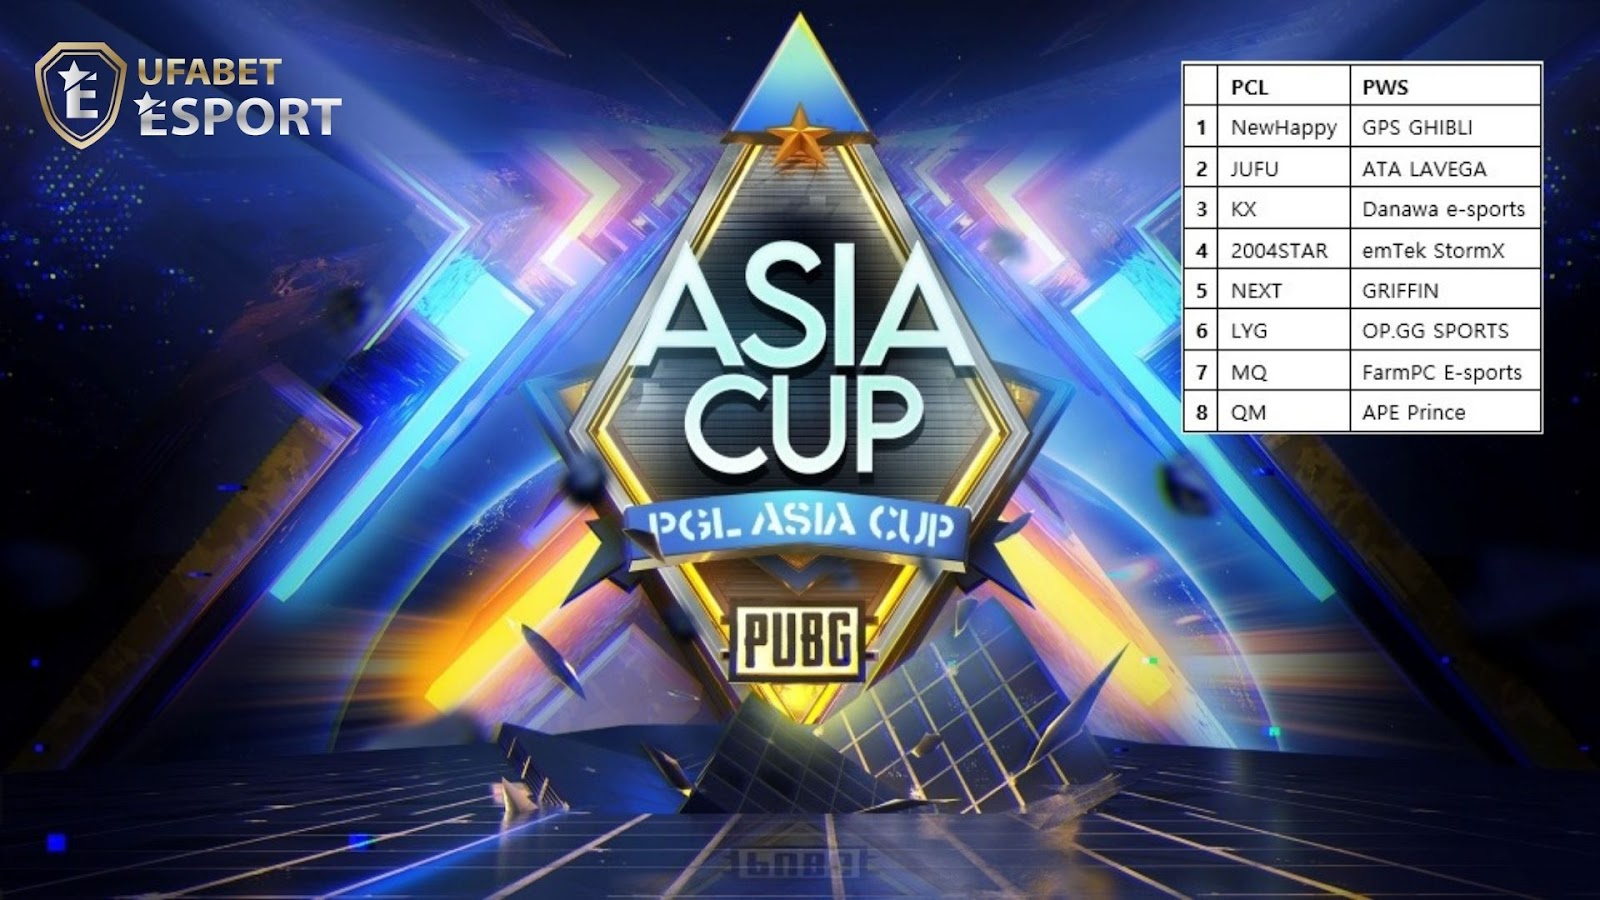 PGL Asia Cup 2021